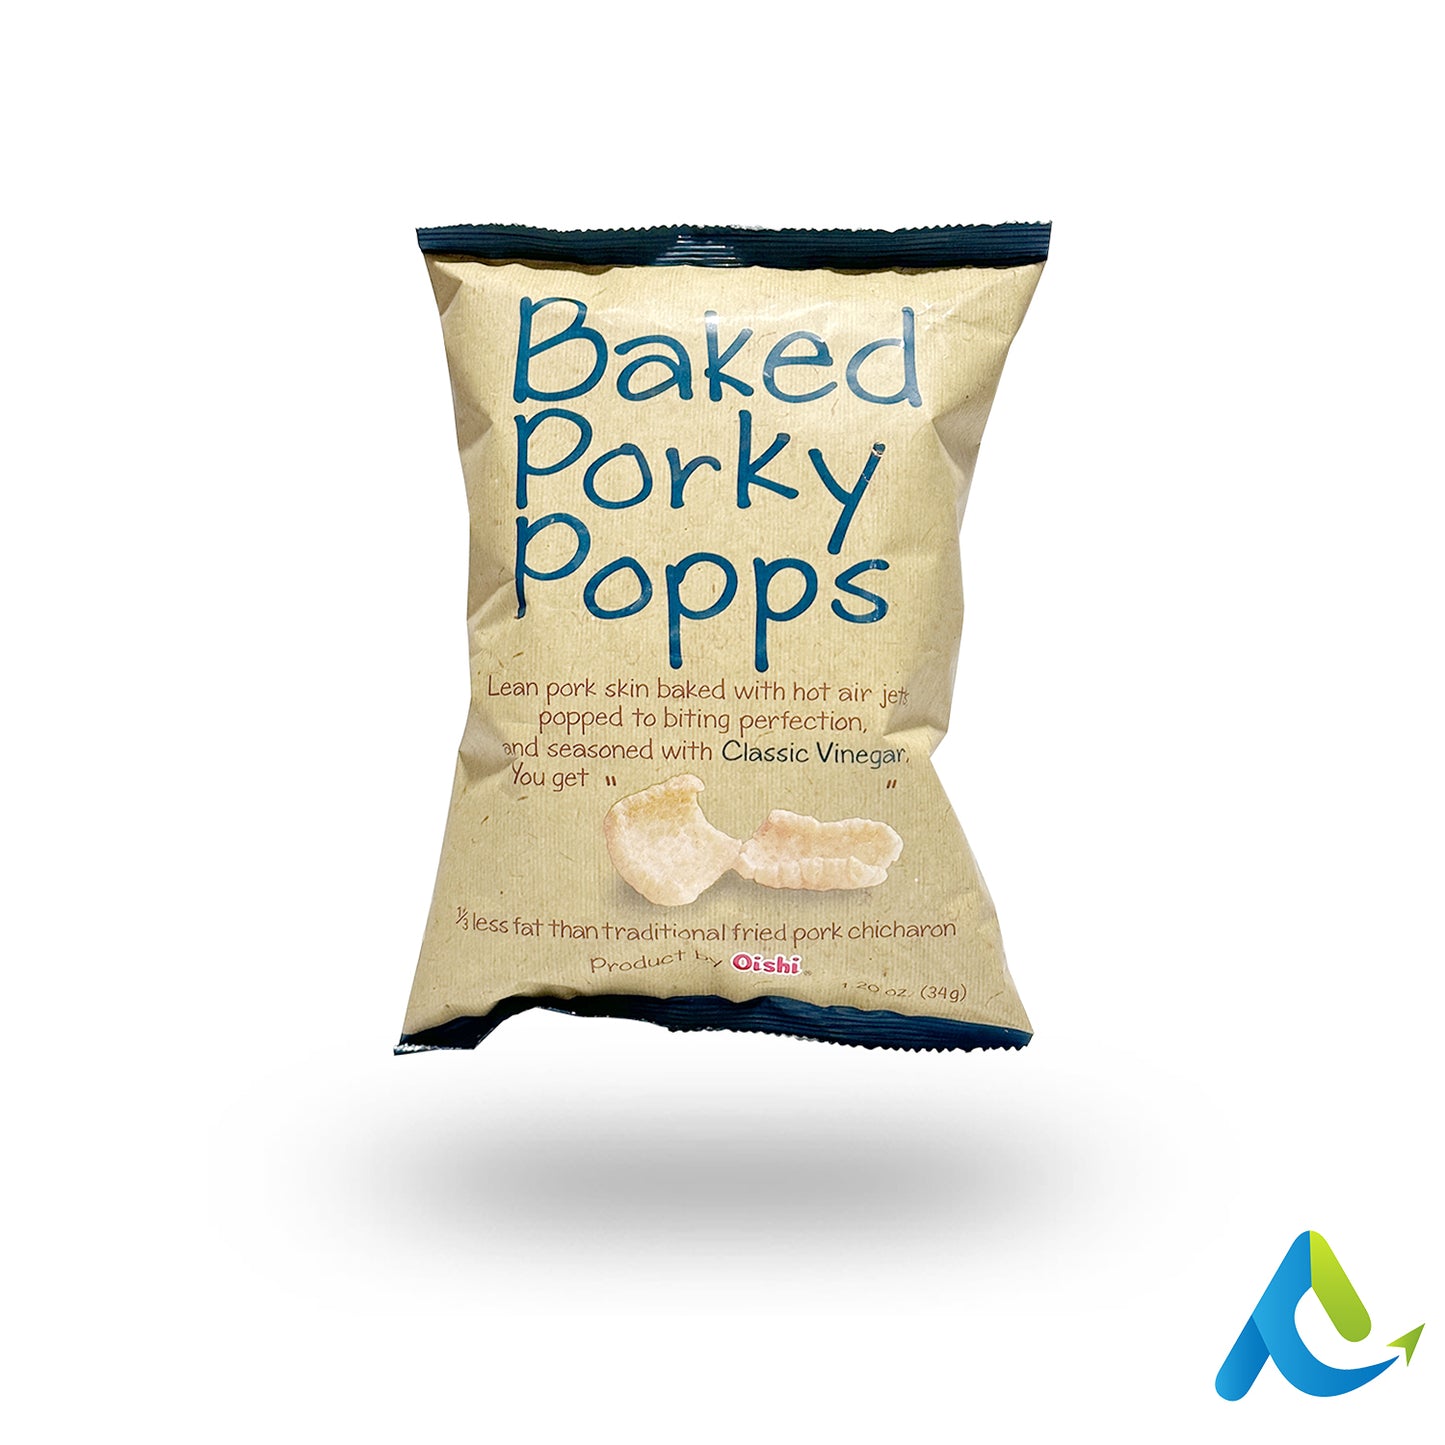 Baked Porky Popps